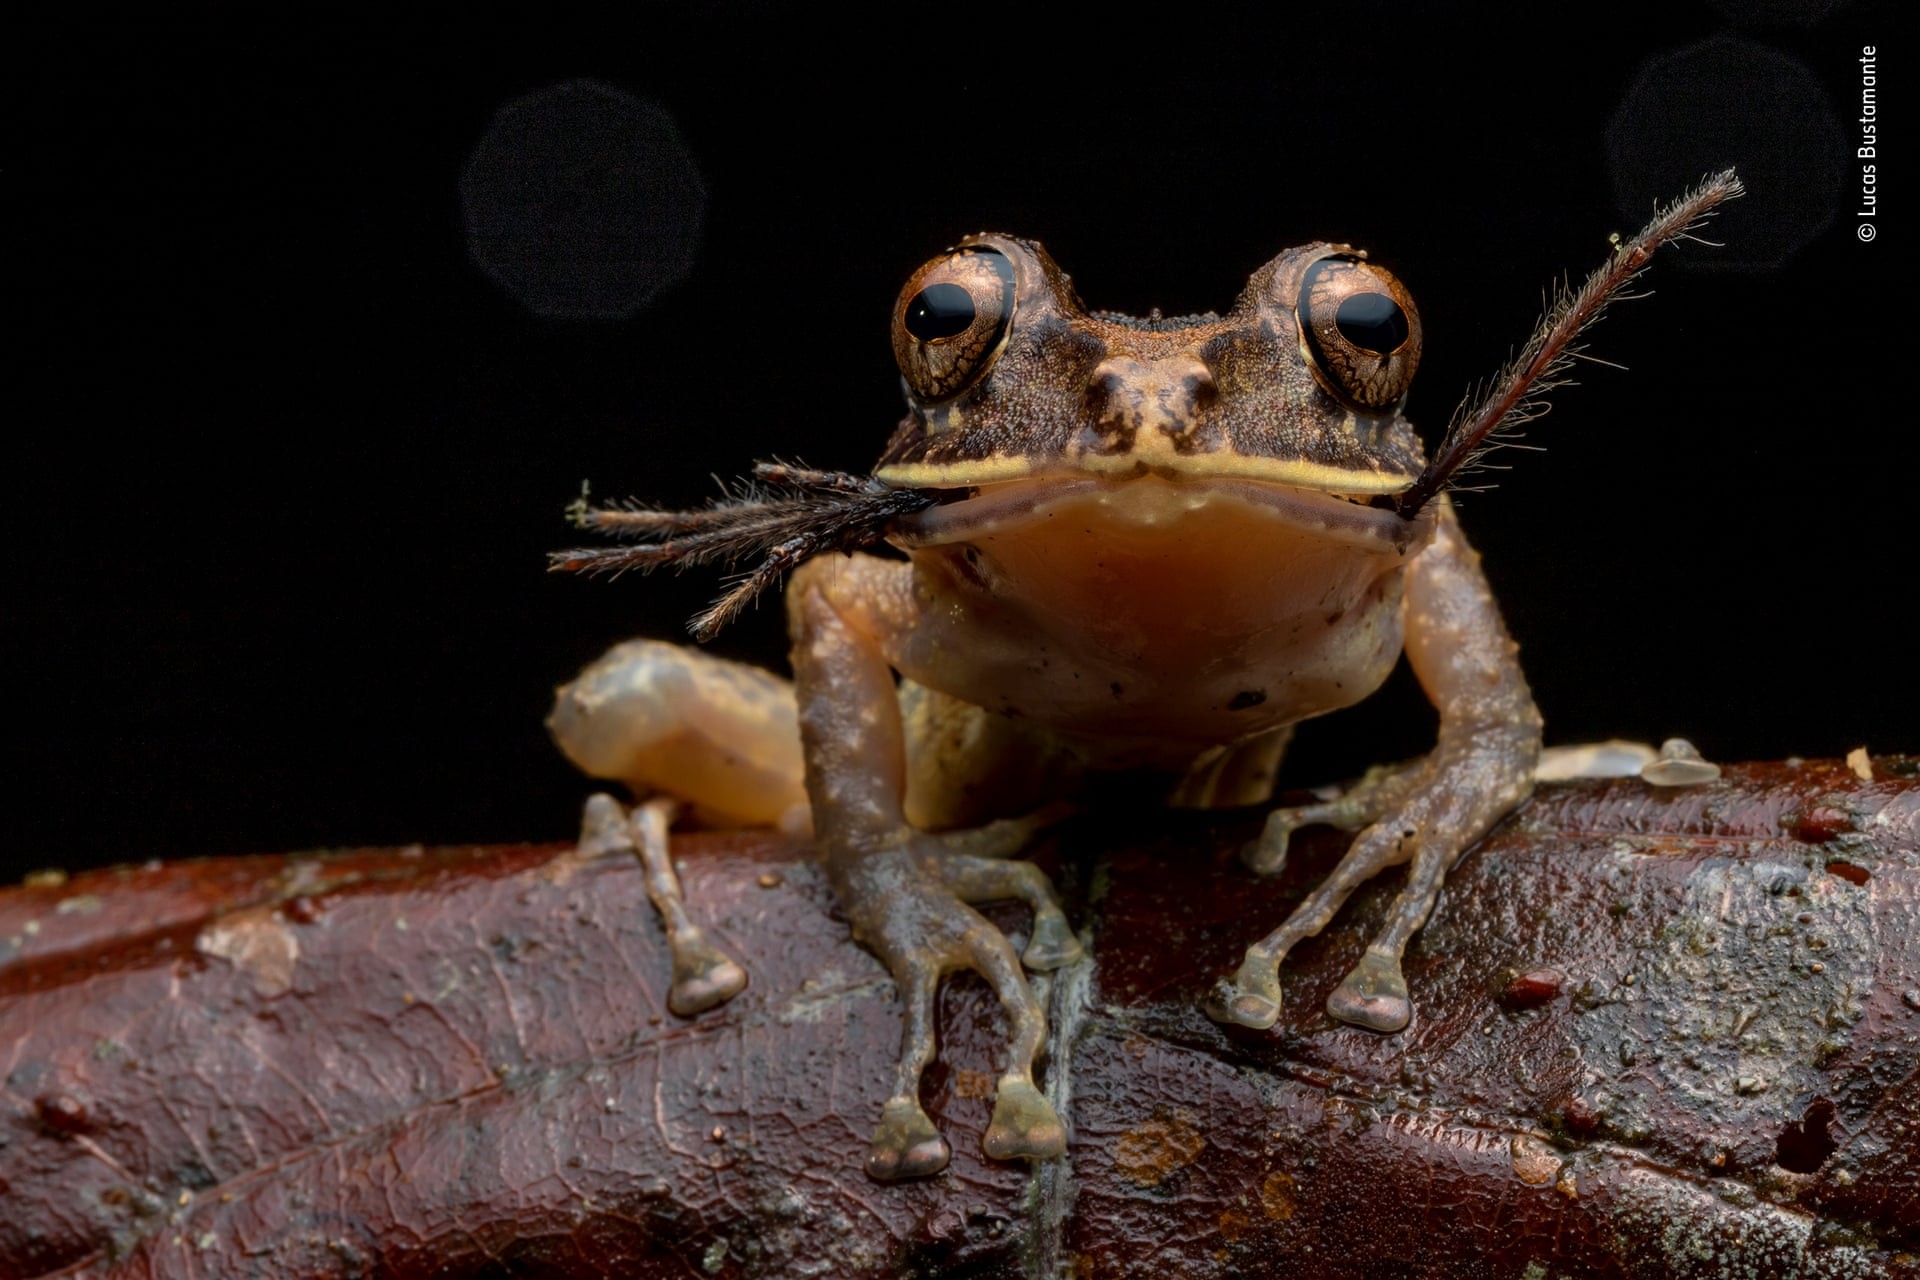 Финалист 2019. Приятного аппетита. Дождевая лягушка, съедающая детёныша тарантула в эквадорских джунглях. Автор Лукас Бустаманте